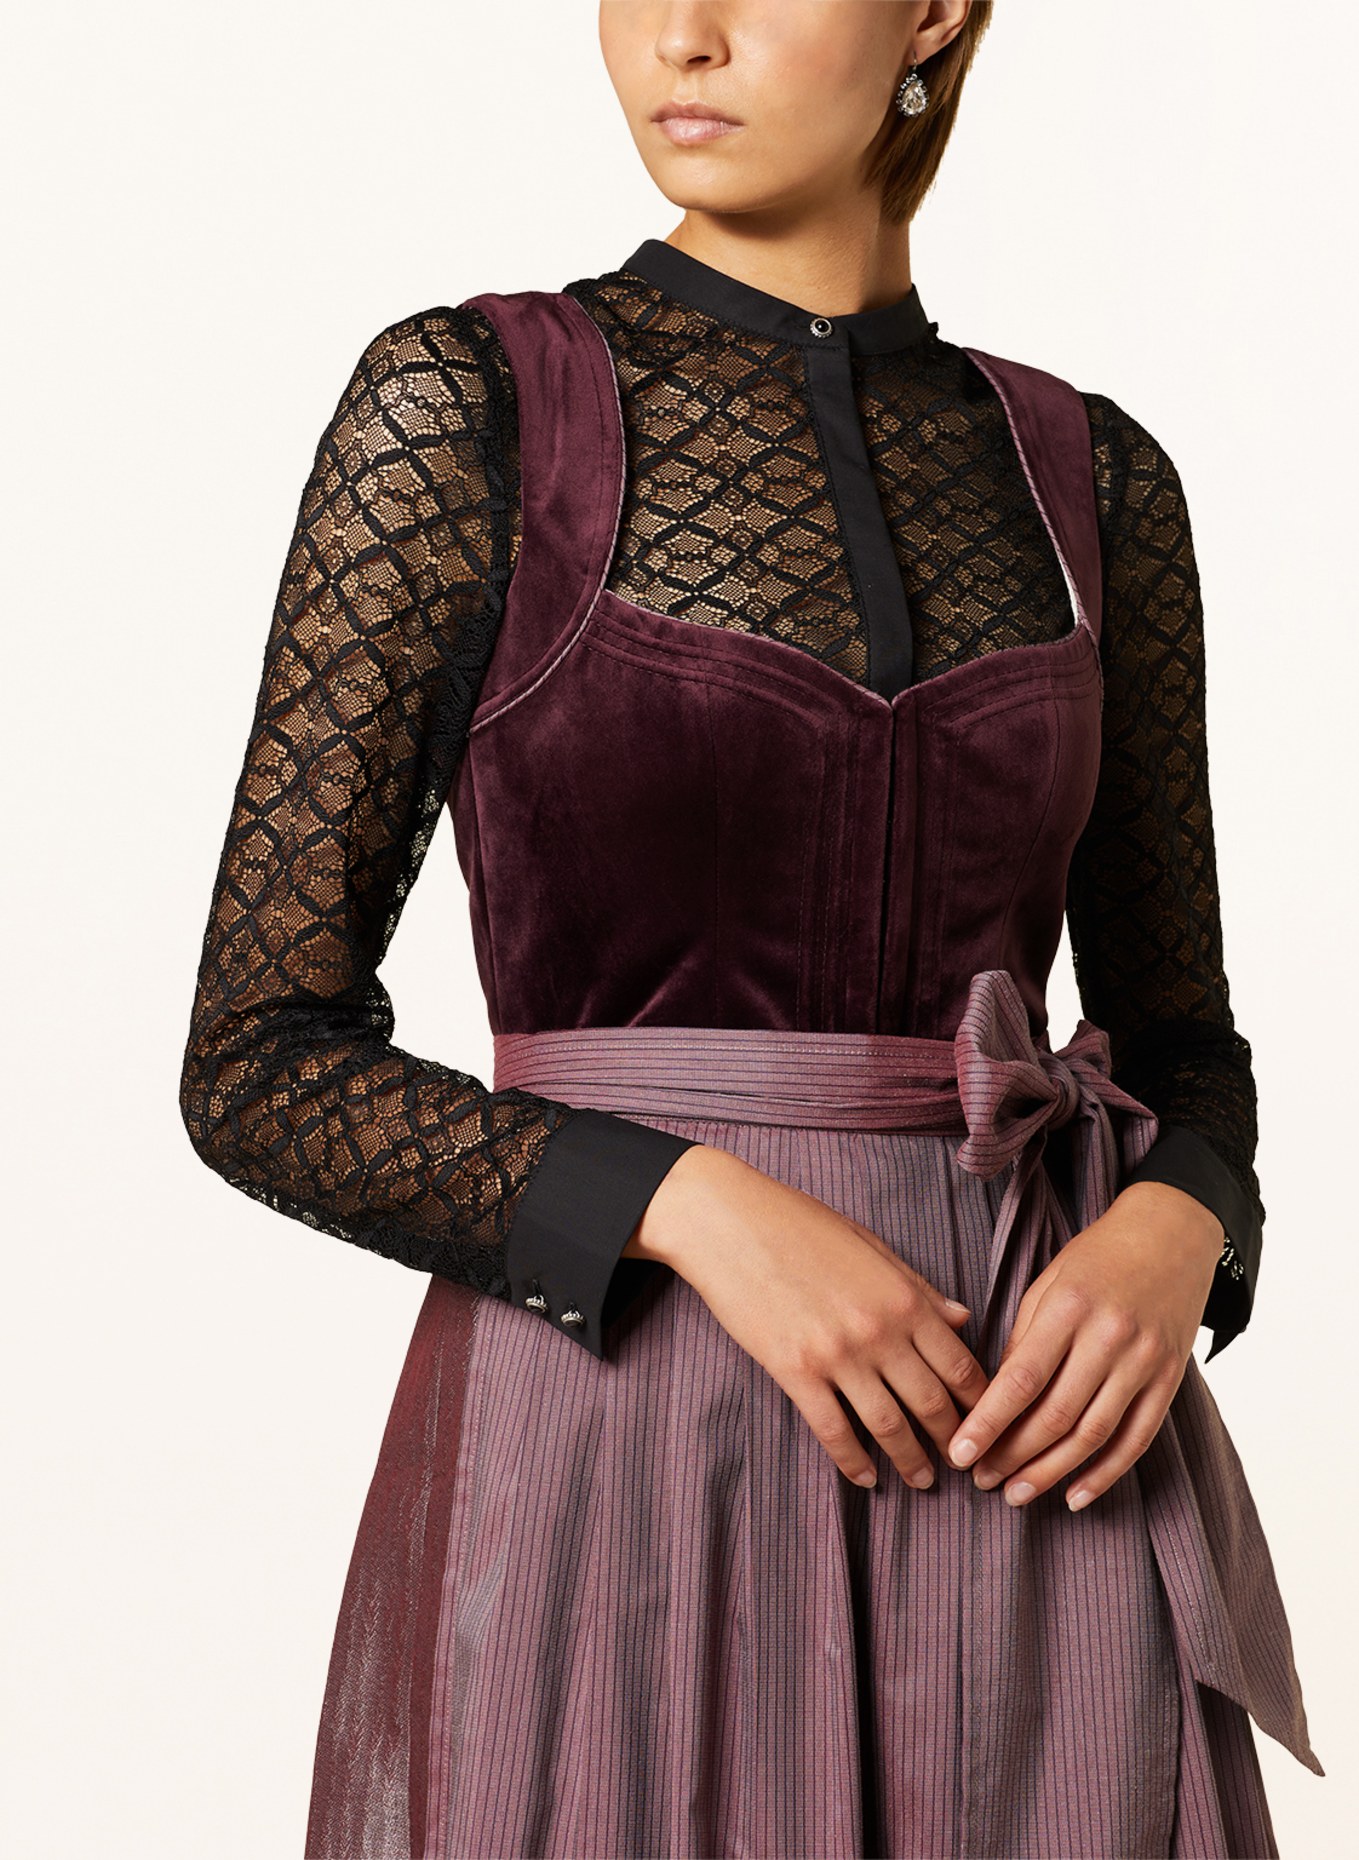 WALDORFF Dirndl blouse made of lace, Color: BLACK (Image 3)